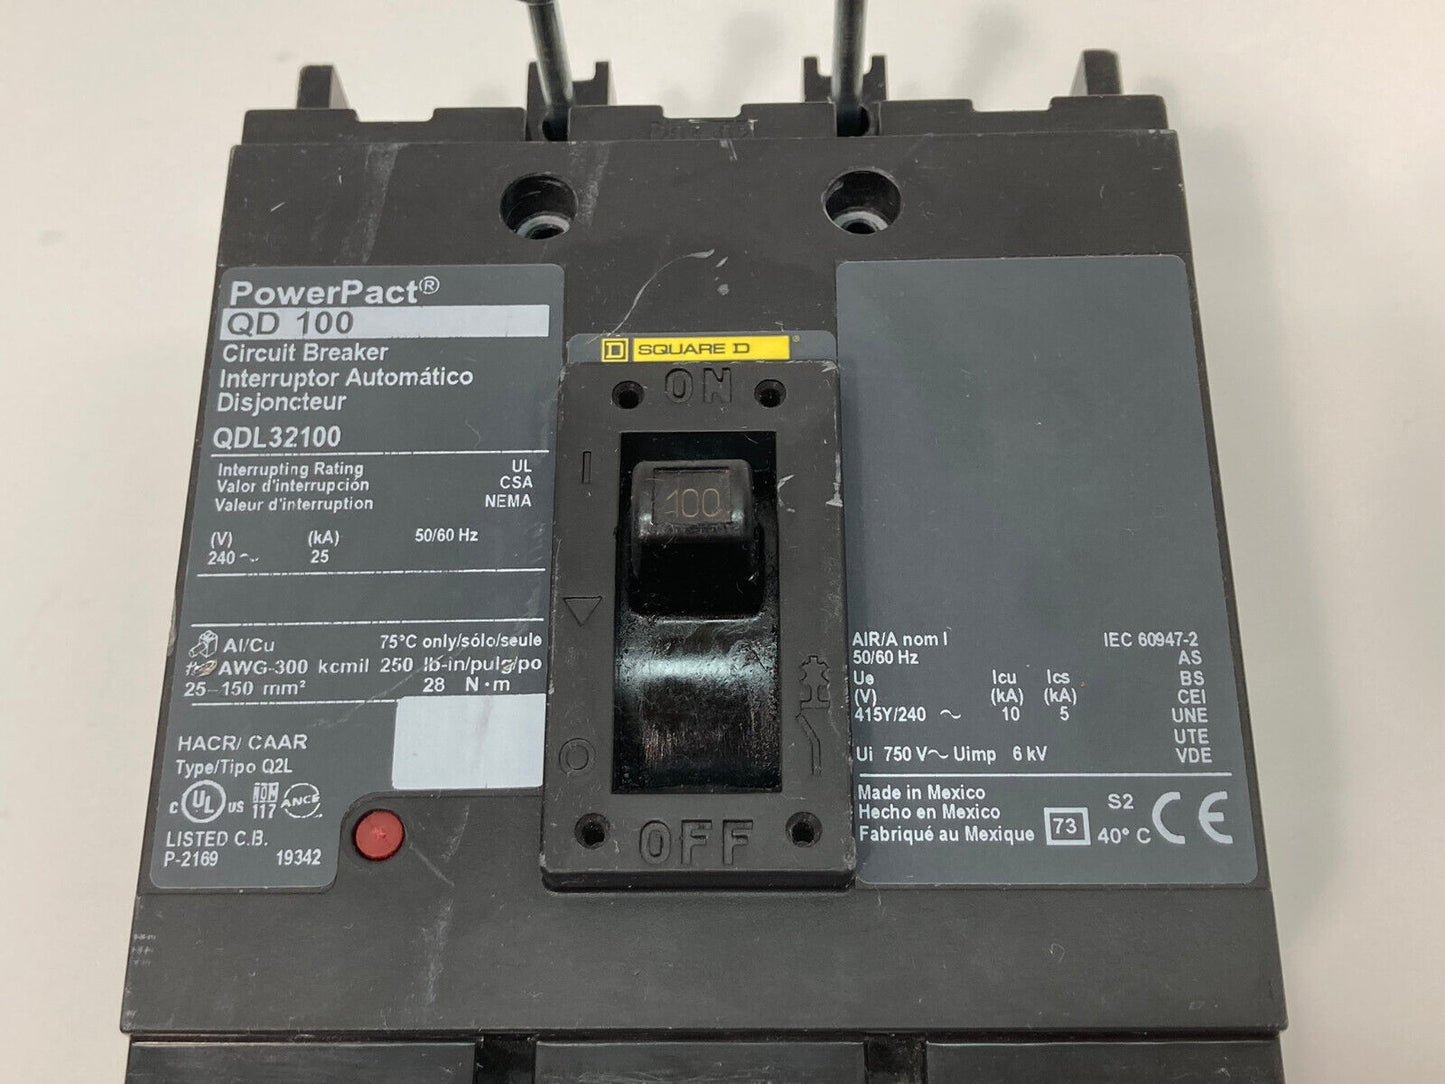 Square D PowerPact QDL32100 Circuit Breaker QD 100